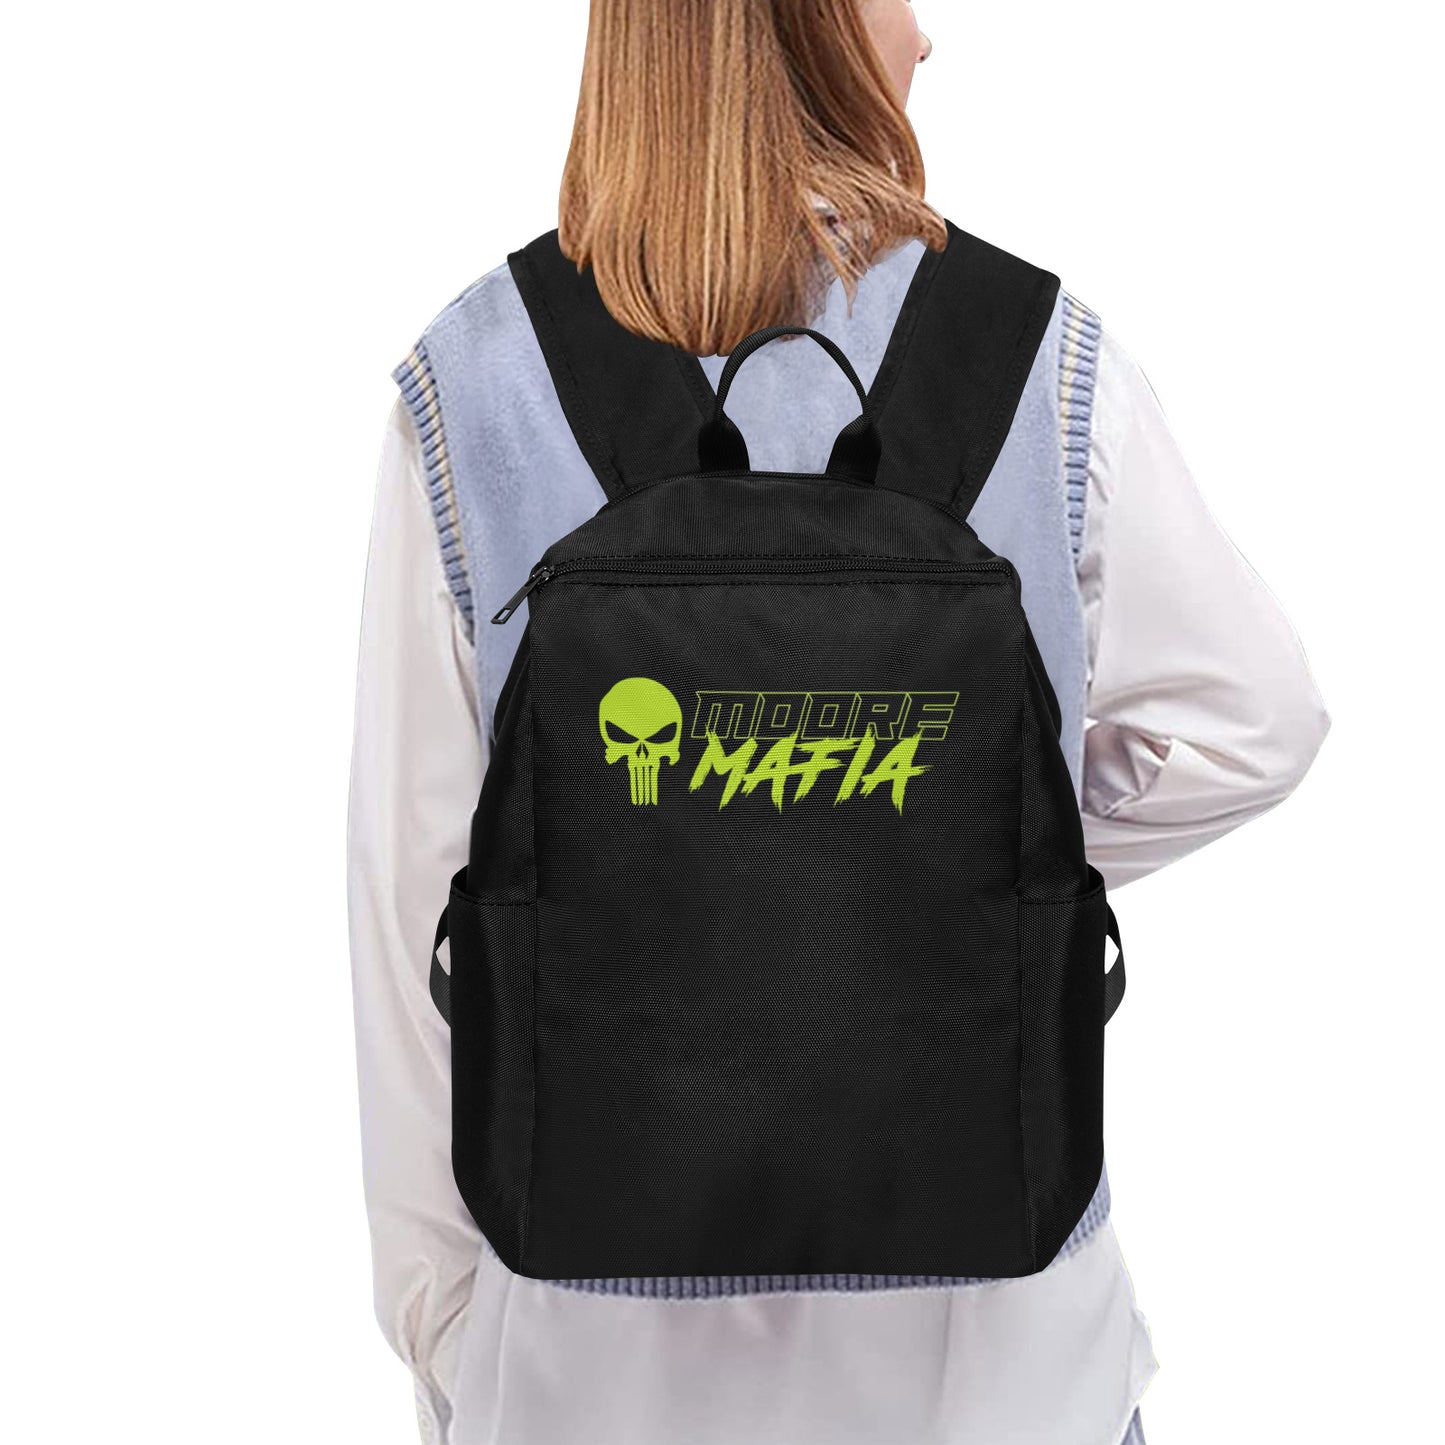 Moore Mafia Lightweight Casual Backpack